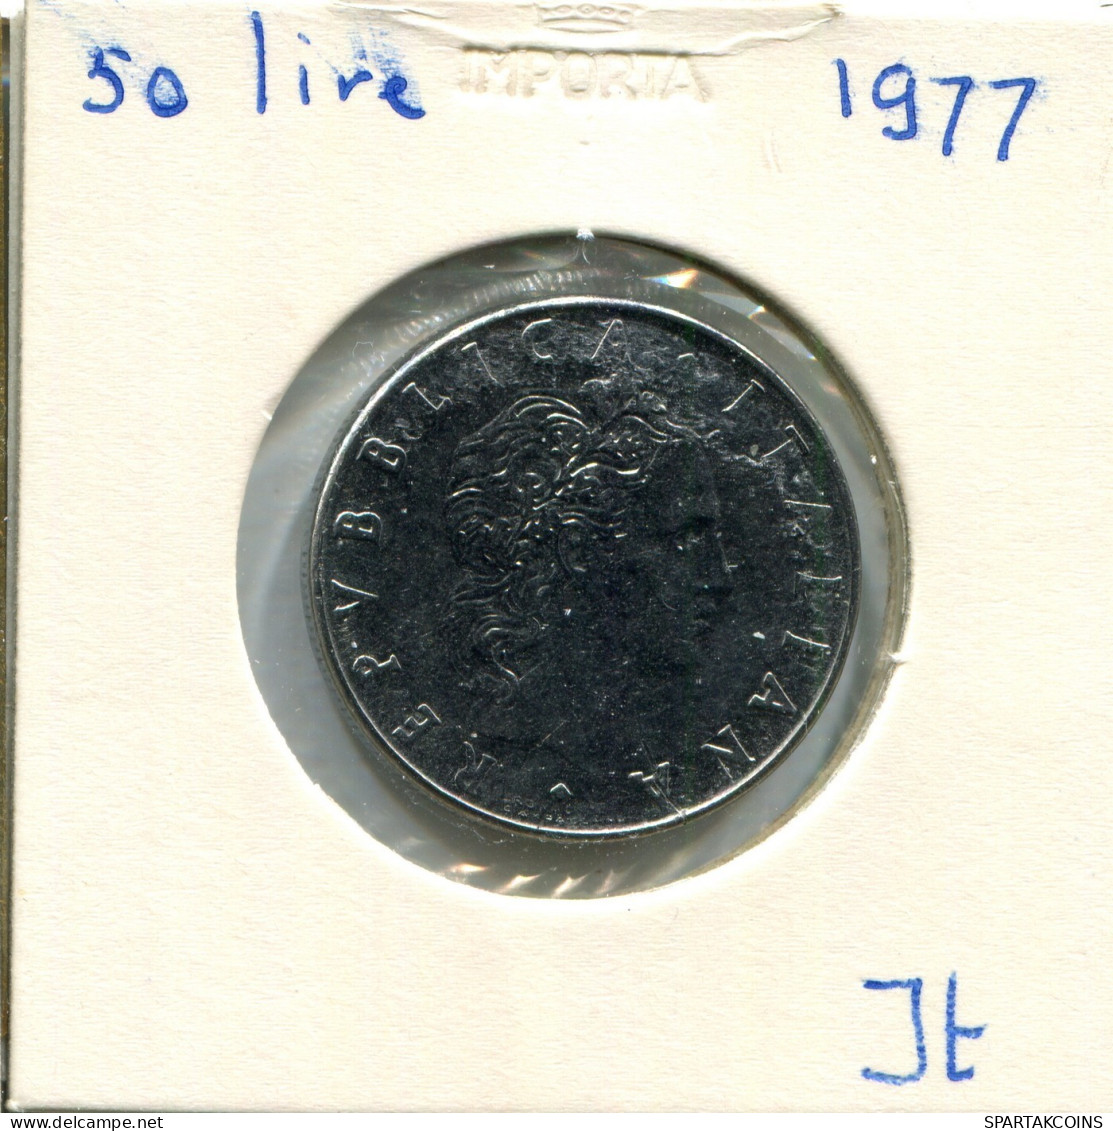 50 LIRE 1977 ITALY Coin #AW764.U.A - 50 Liras